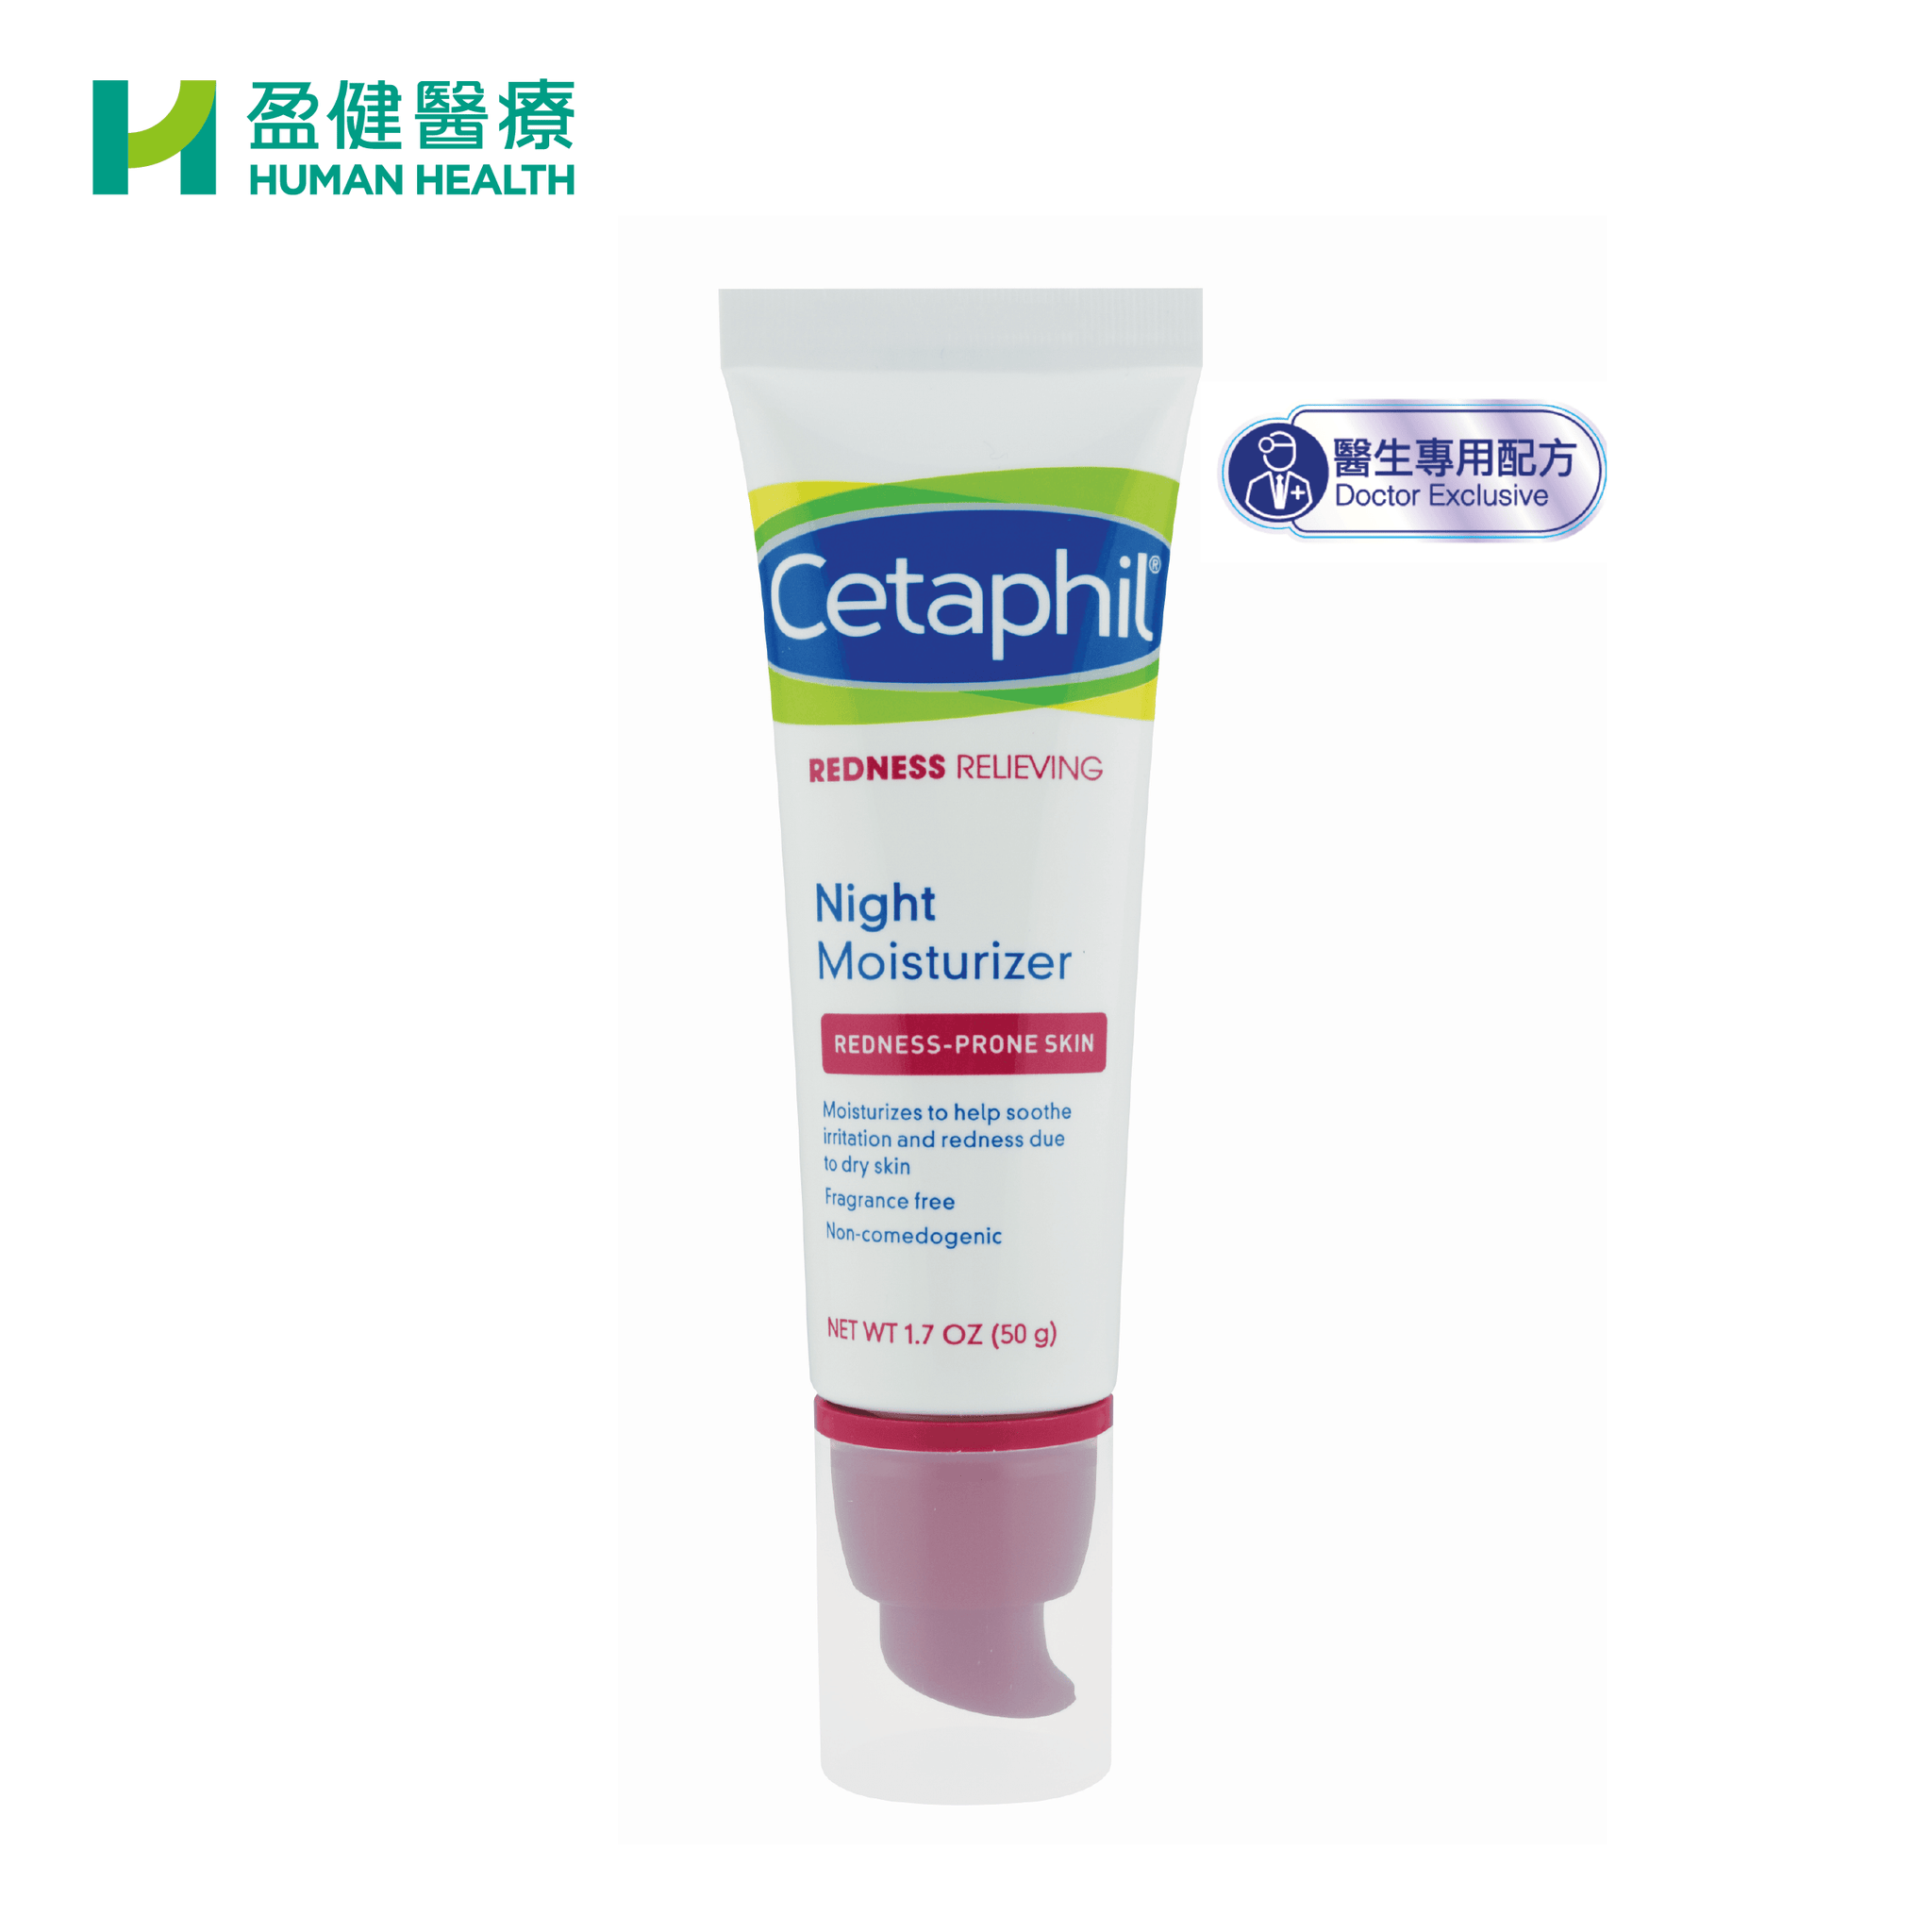 Cetaphil 舒特膚抗敏祛紅修護晚霜 (H-CETA16) - 盈健醫療 - 搜羅不同類型健康產品及服務